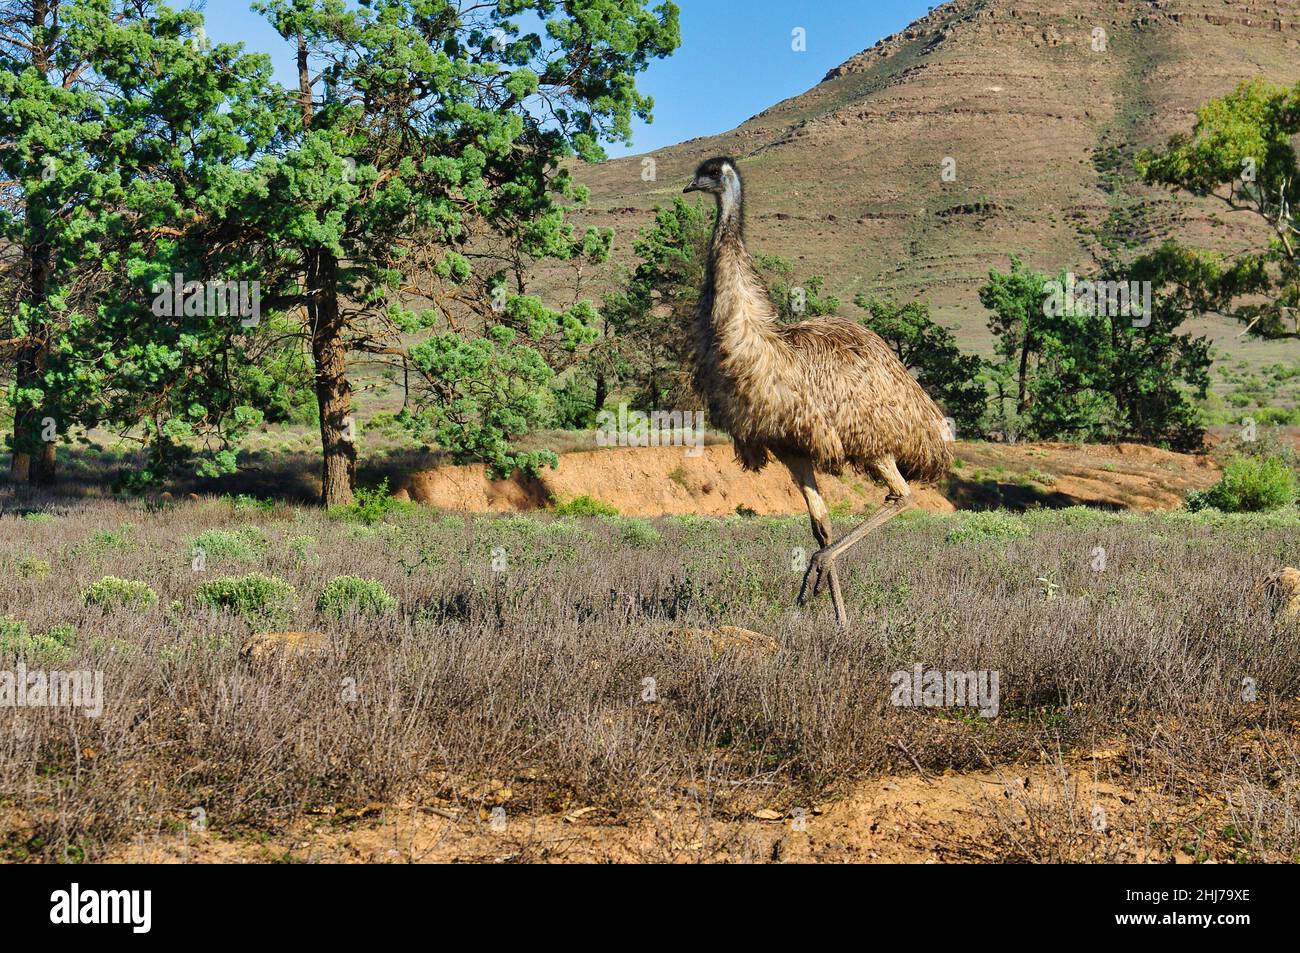 An emu (Dromaius novaehollandiae), a flightless bird, in the arid landscape of the Flinders Ranges, South Australia Stock Photo